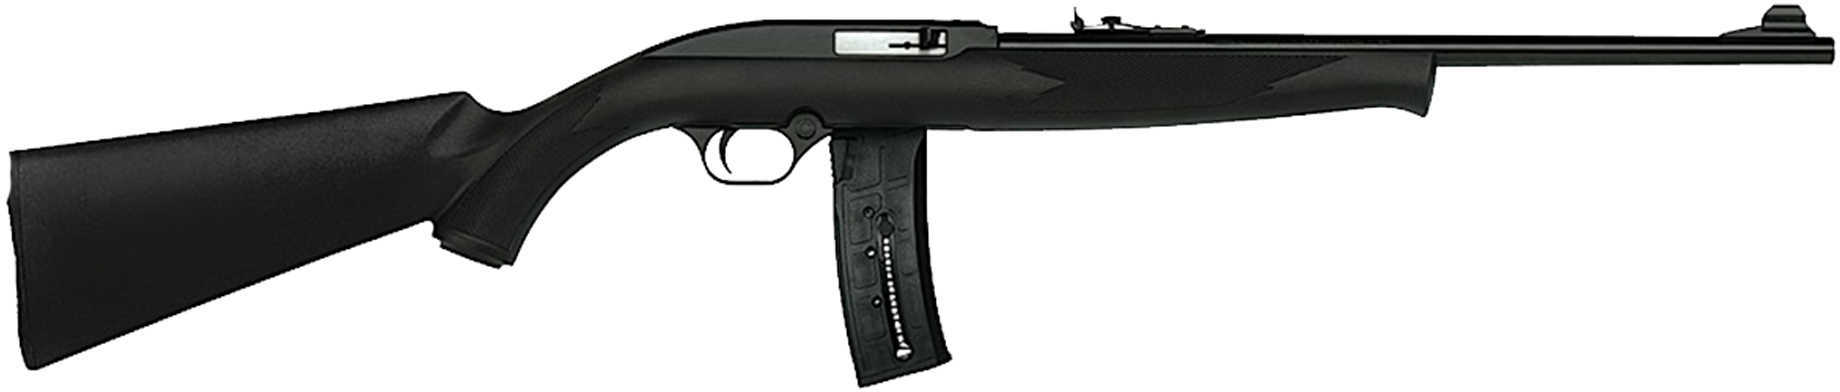 Mossberg 702 Plinkster 22 Long Rifle 18" Barrel 25 Round Blued Synthetic Stock Semi Automatic 37002